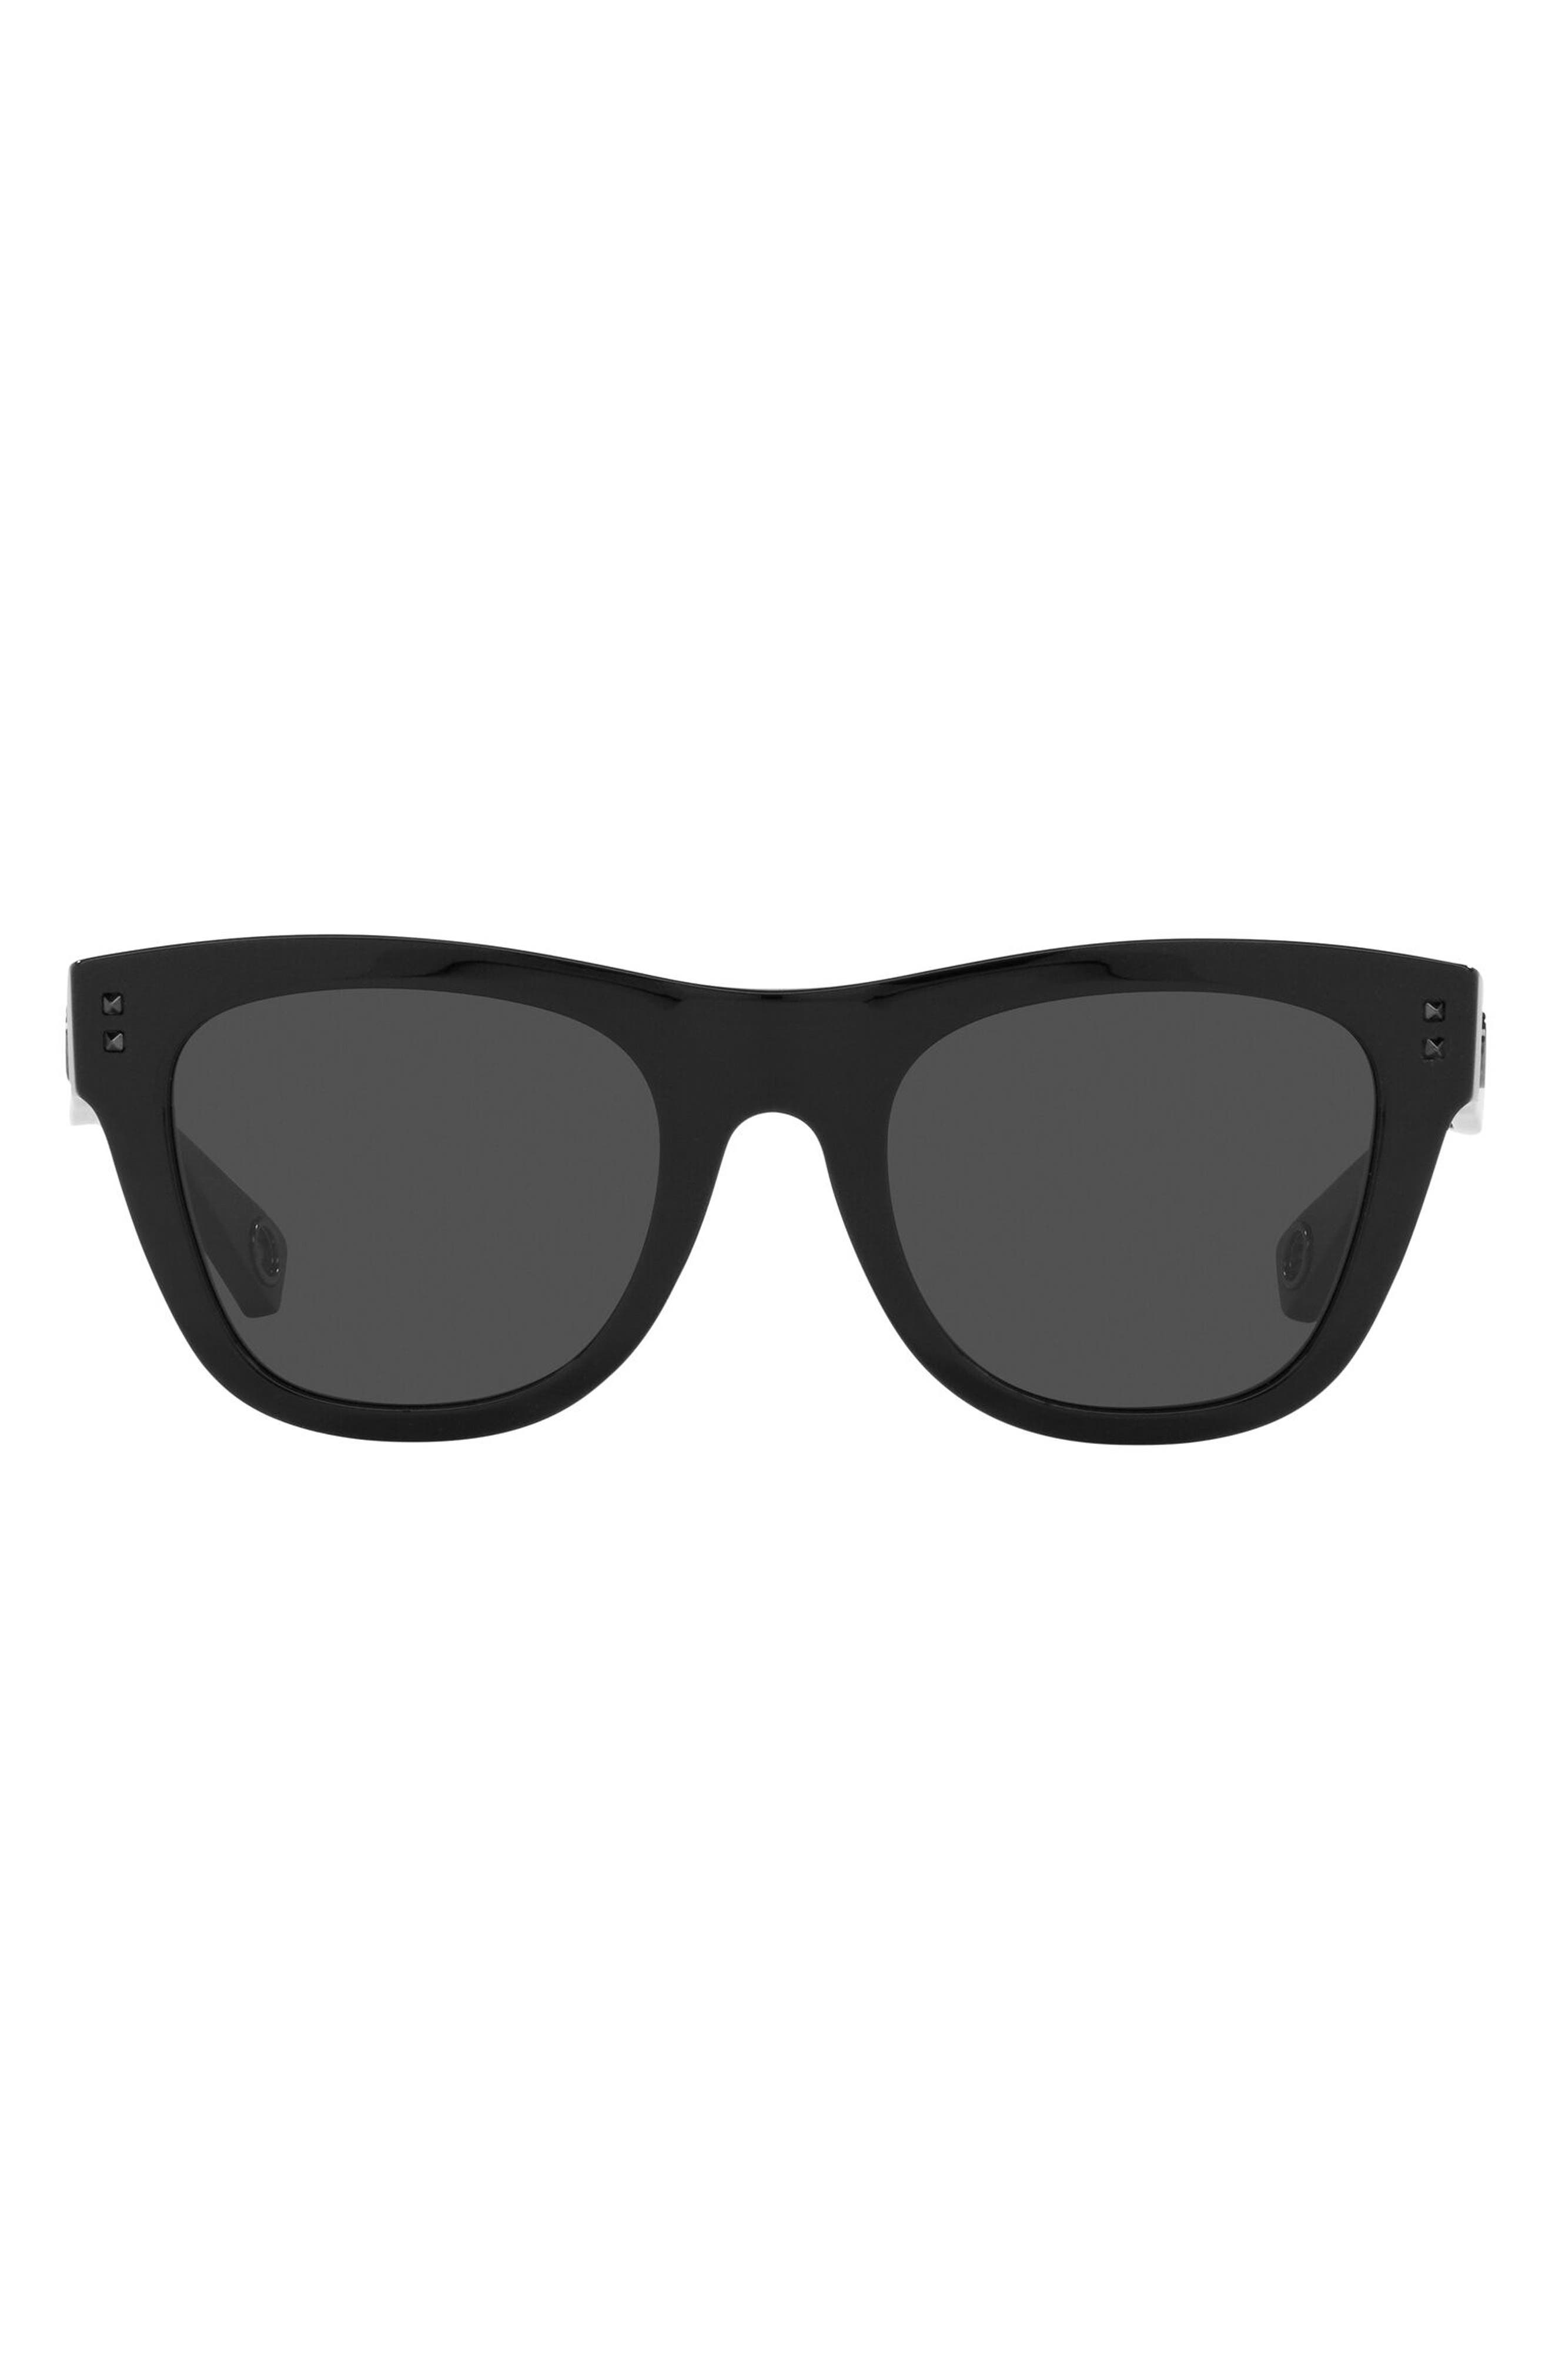 Valentino 52mm Square Sunglasses in Black/Grey at Nordstrom